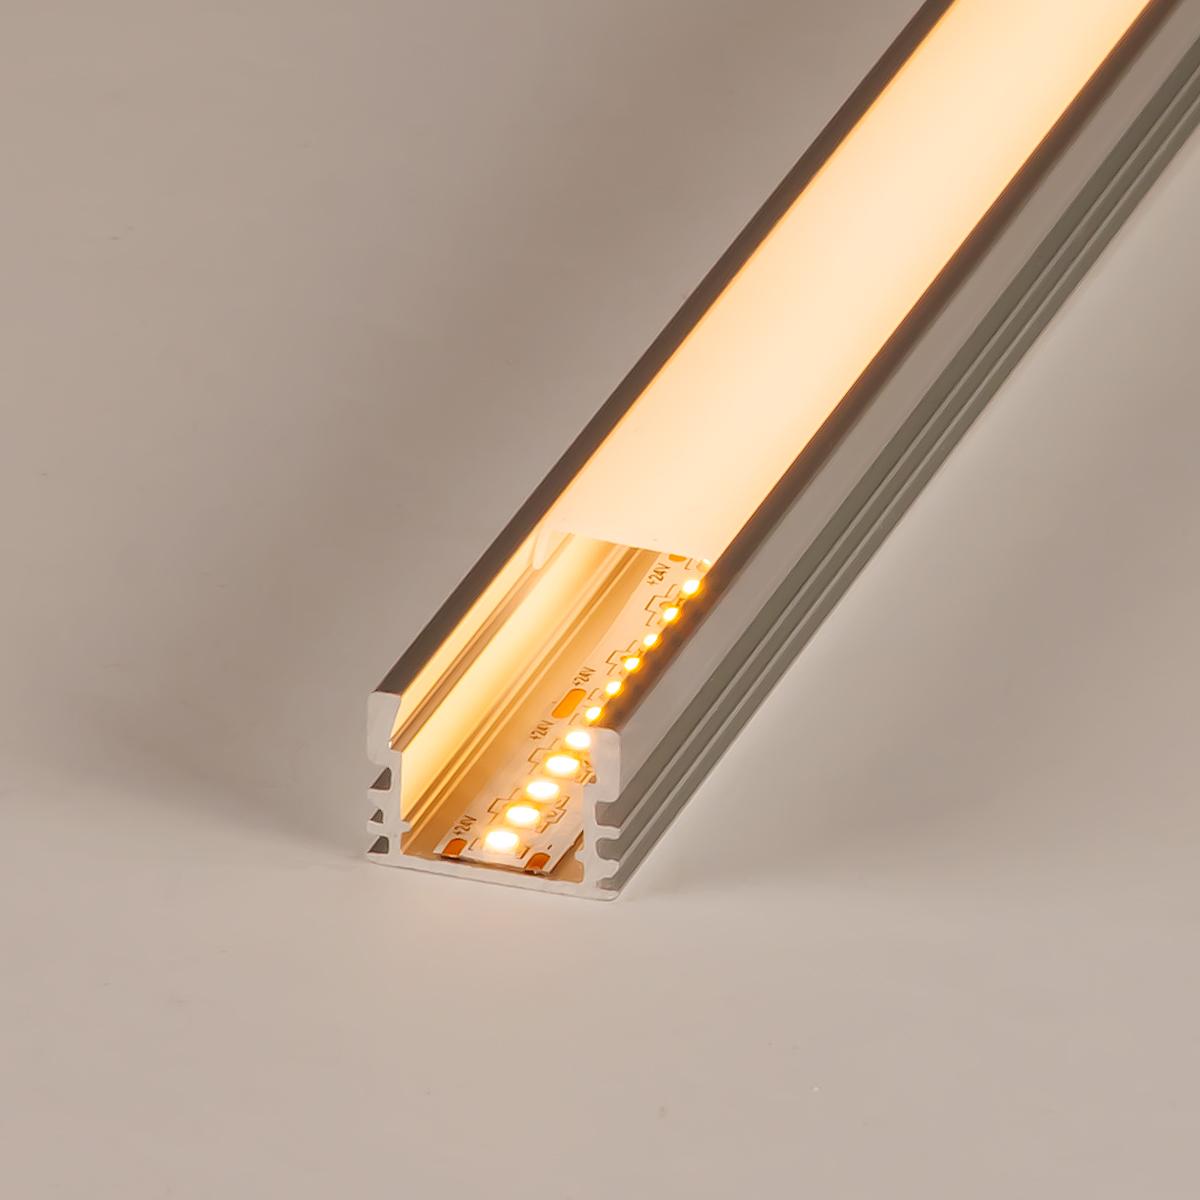 Alu Profil für LED Streifen U-Profil silber eloxiert 17 x 12mm